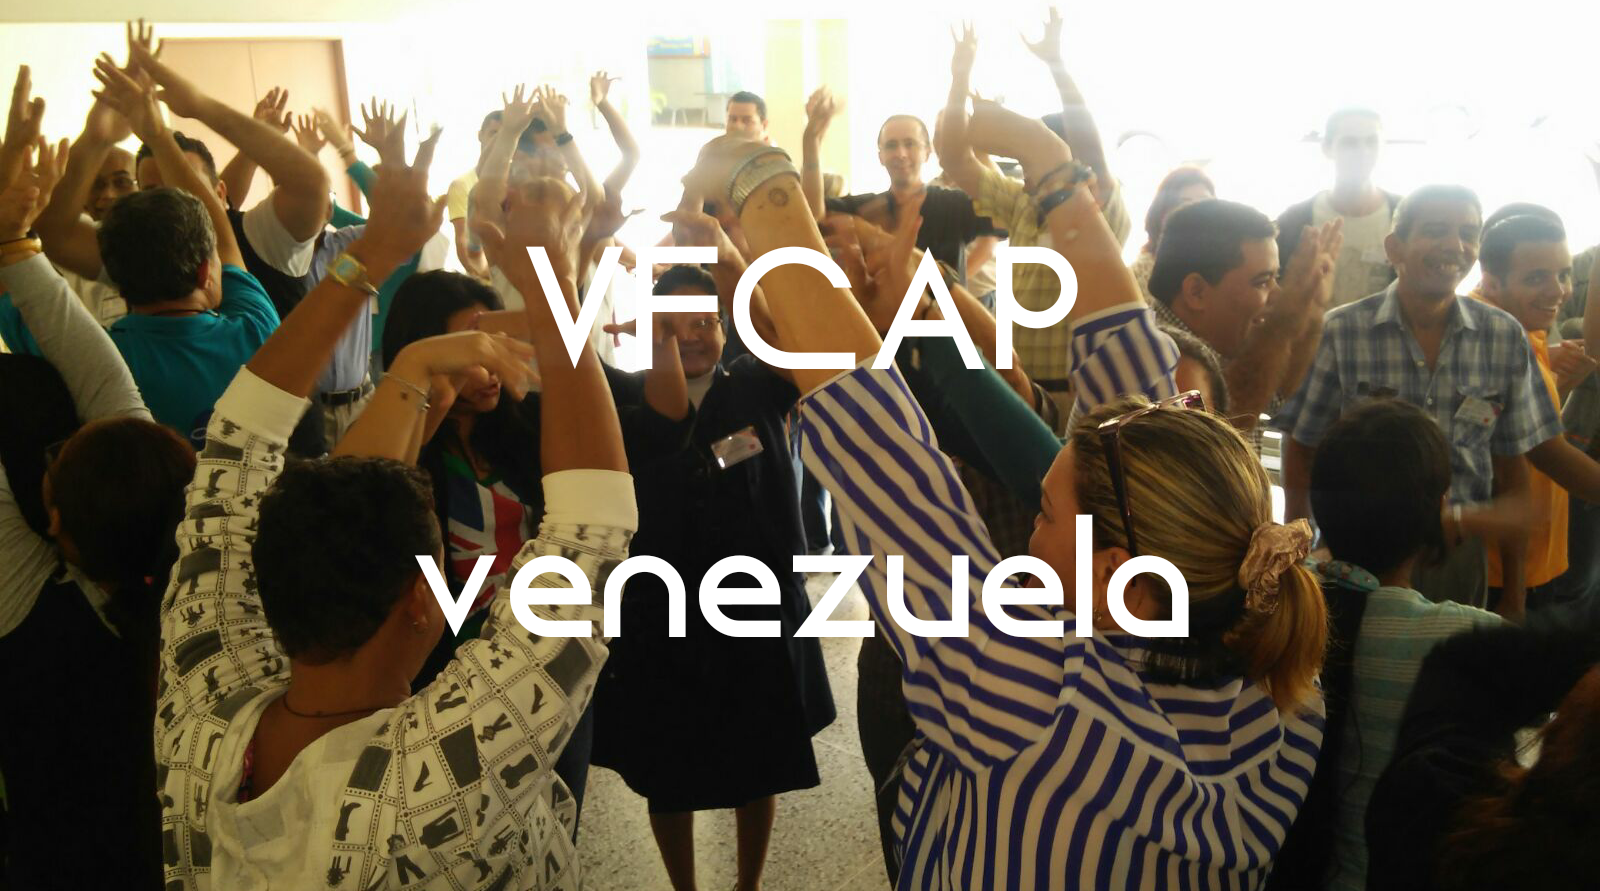 vfcap_venezuela